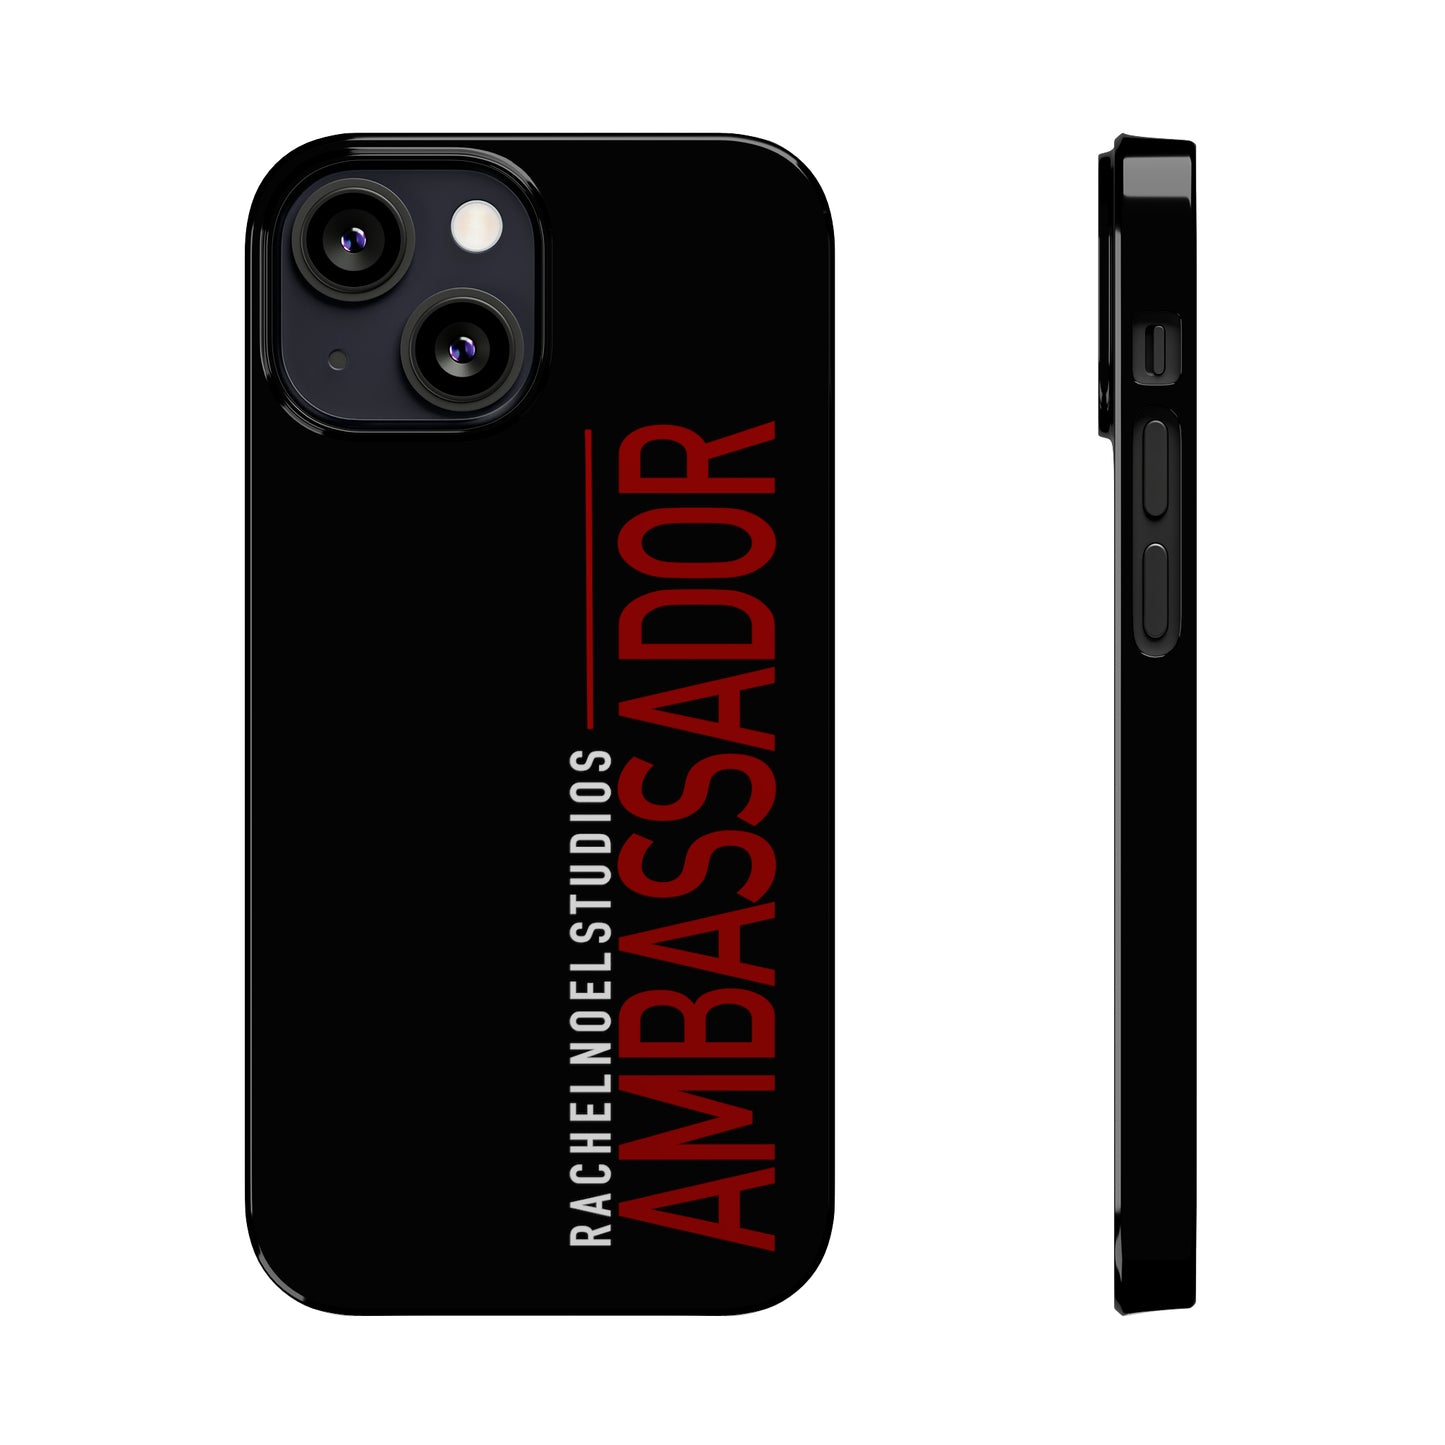 “Ambassador” RNS Phone Cases